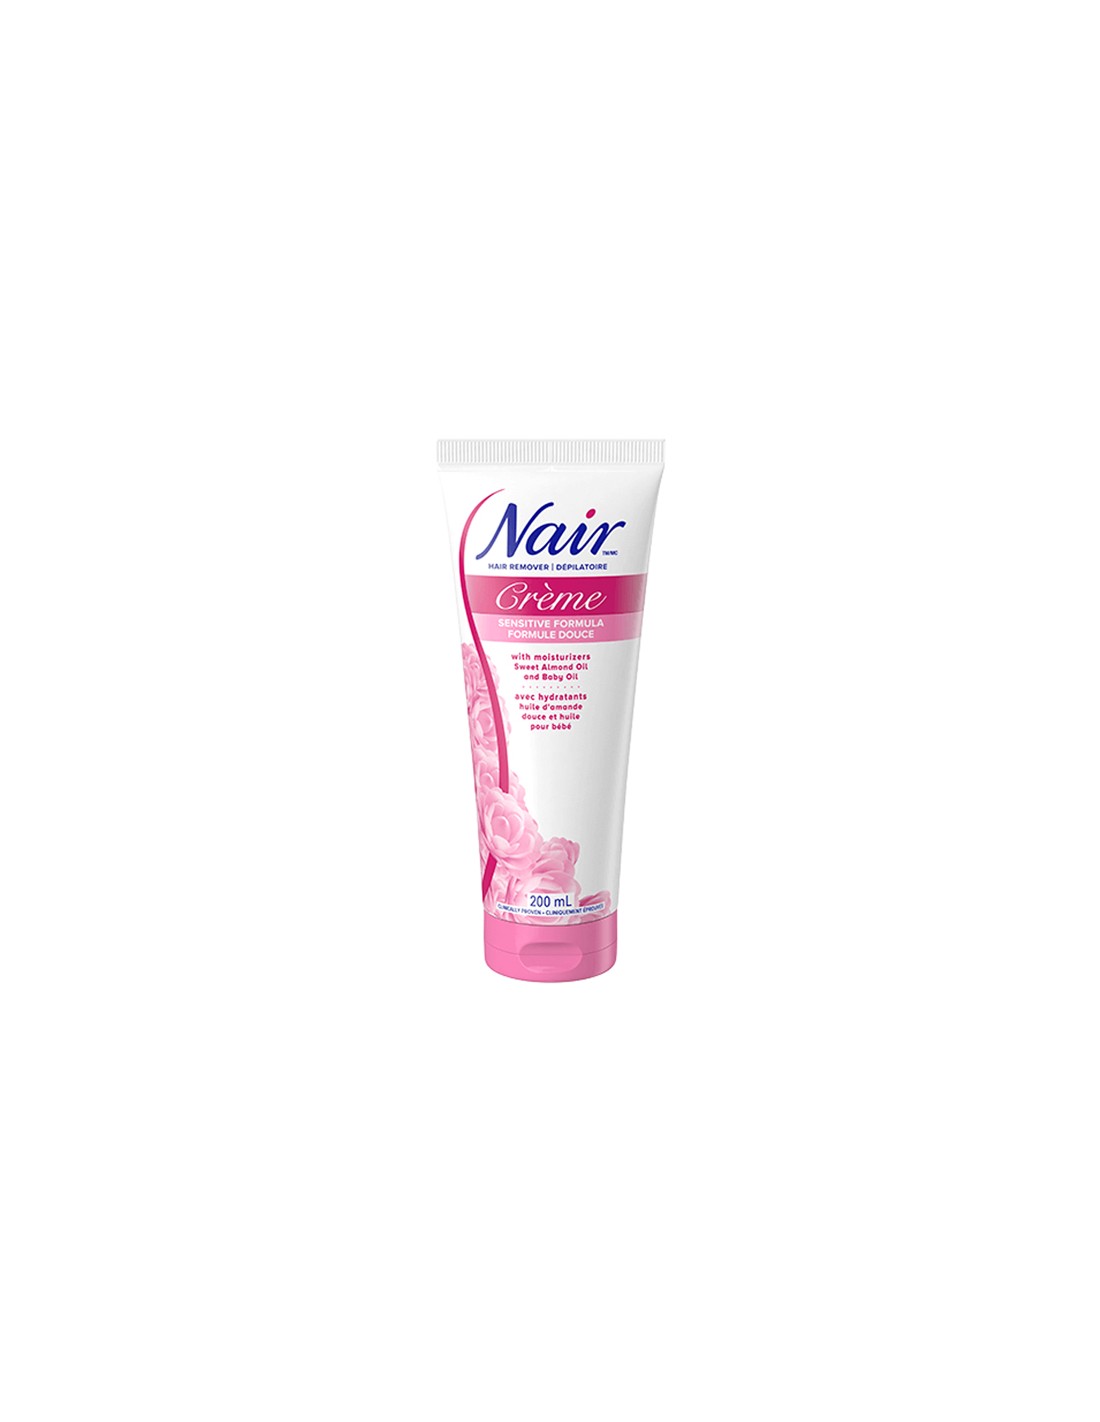 Nair Hair Removal Cream Sensitive Formula for Body